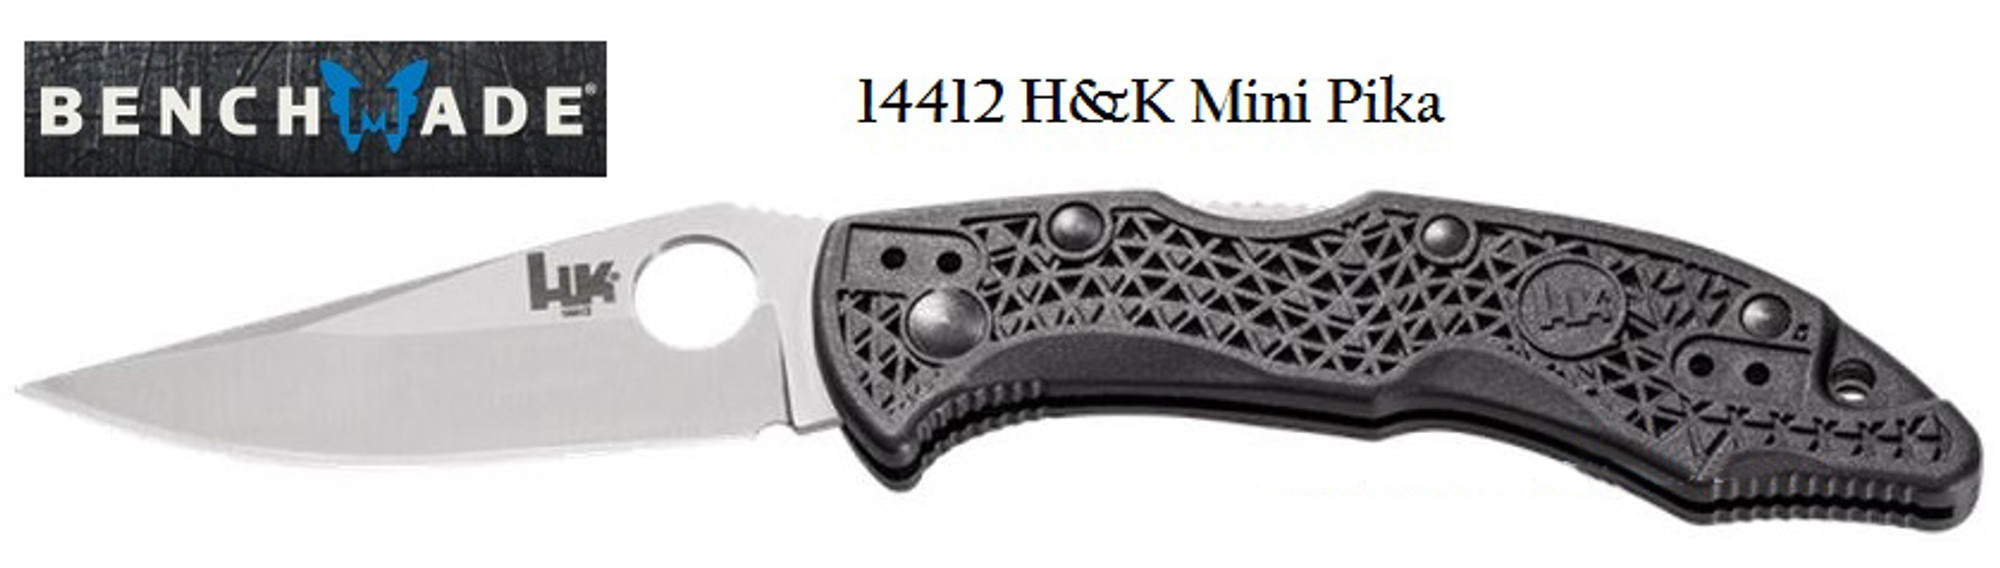 Heckler & Koch 14412 Mini Pika Drop Point - Plain Edge